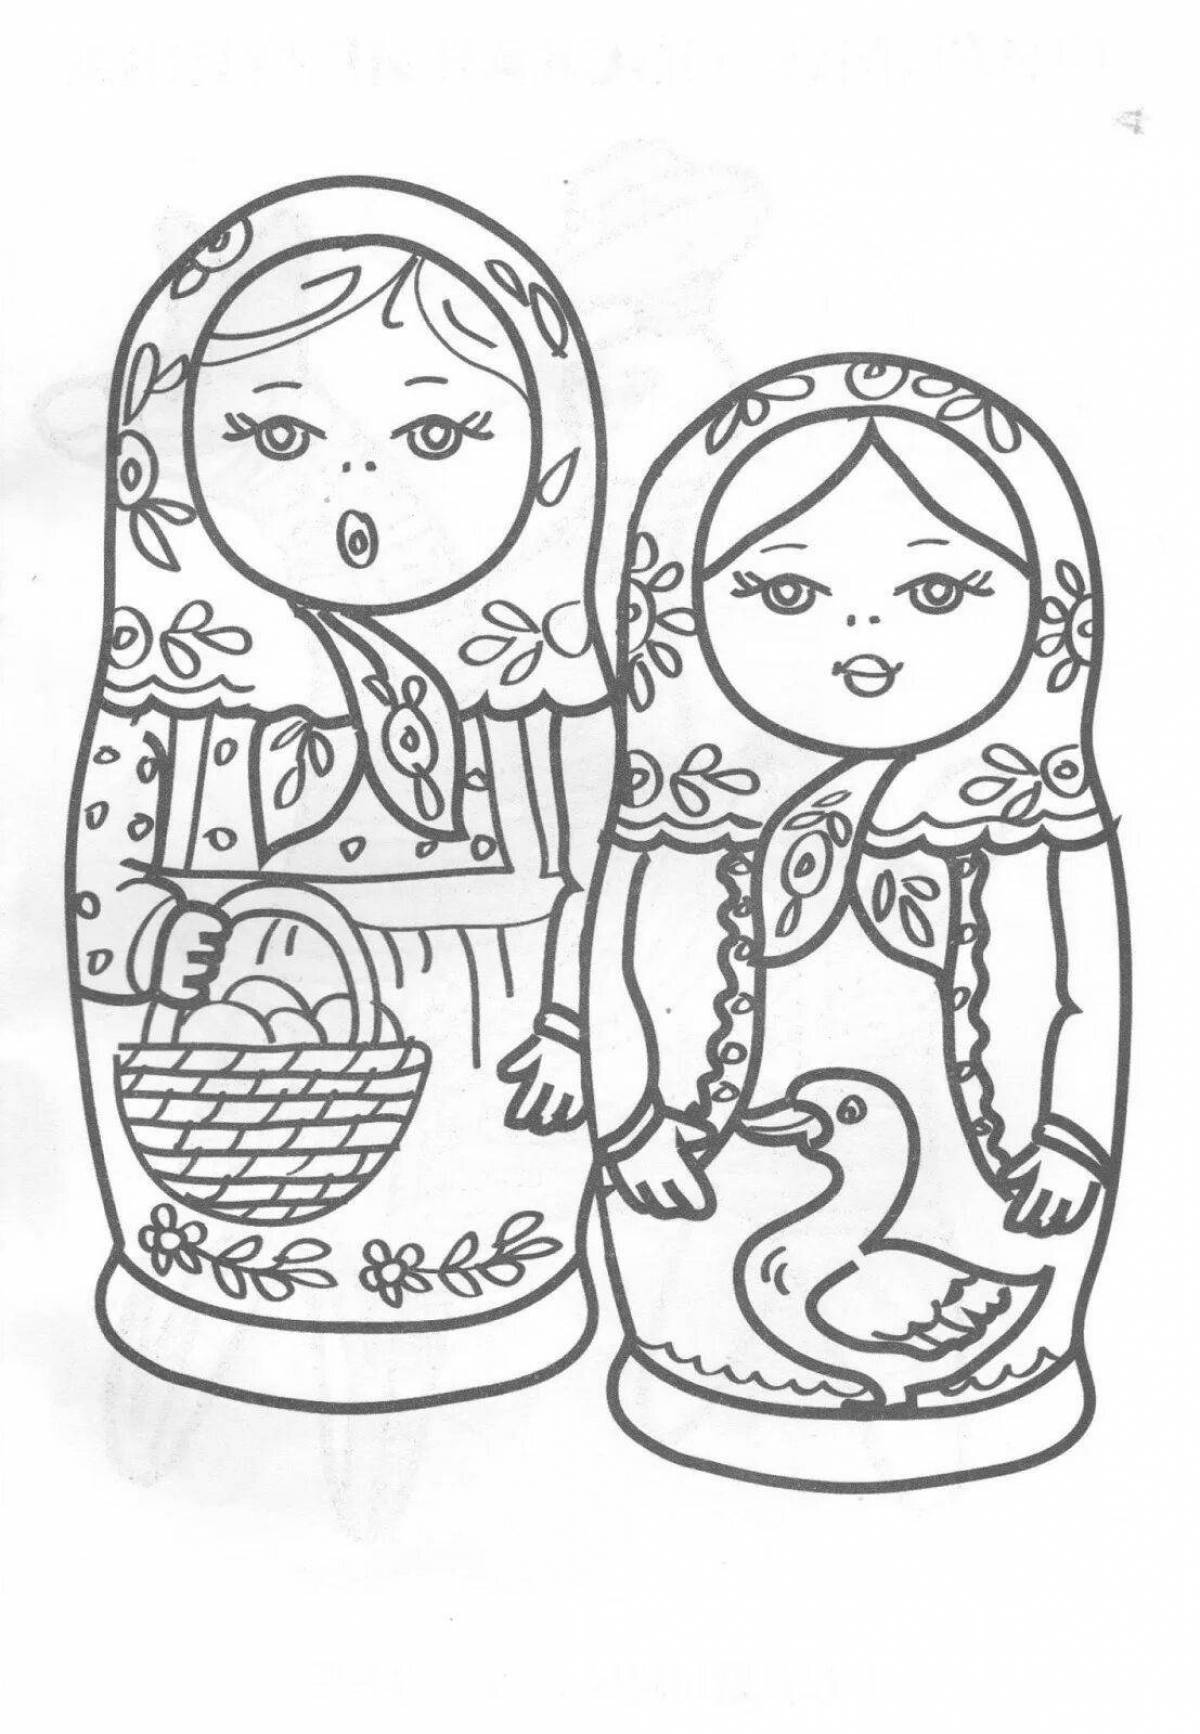 Delightful Russian folk crafts for children